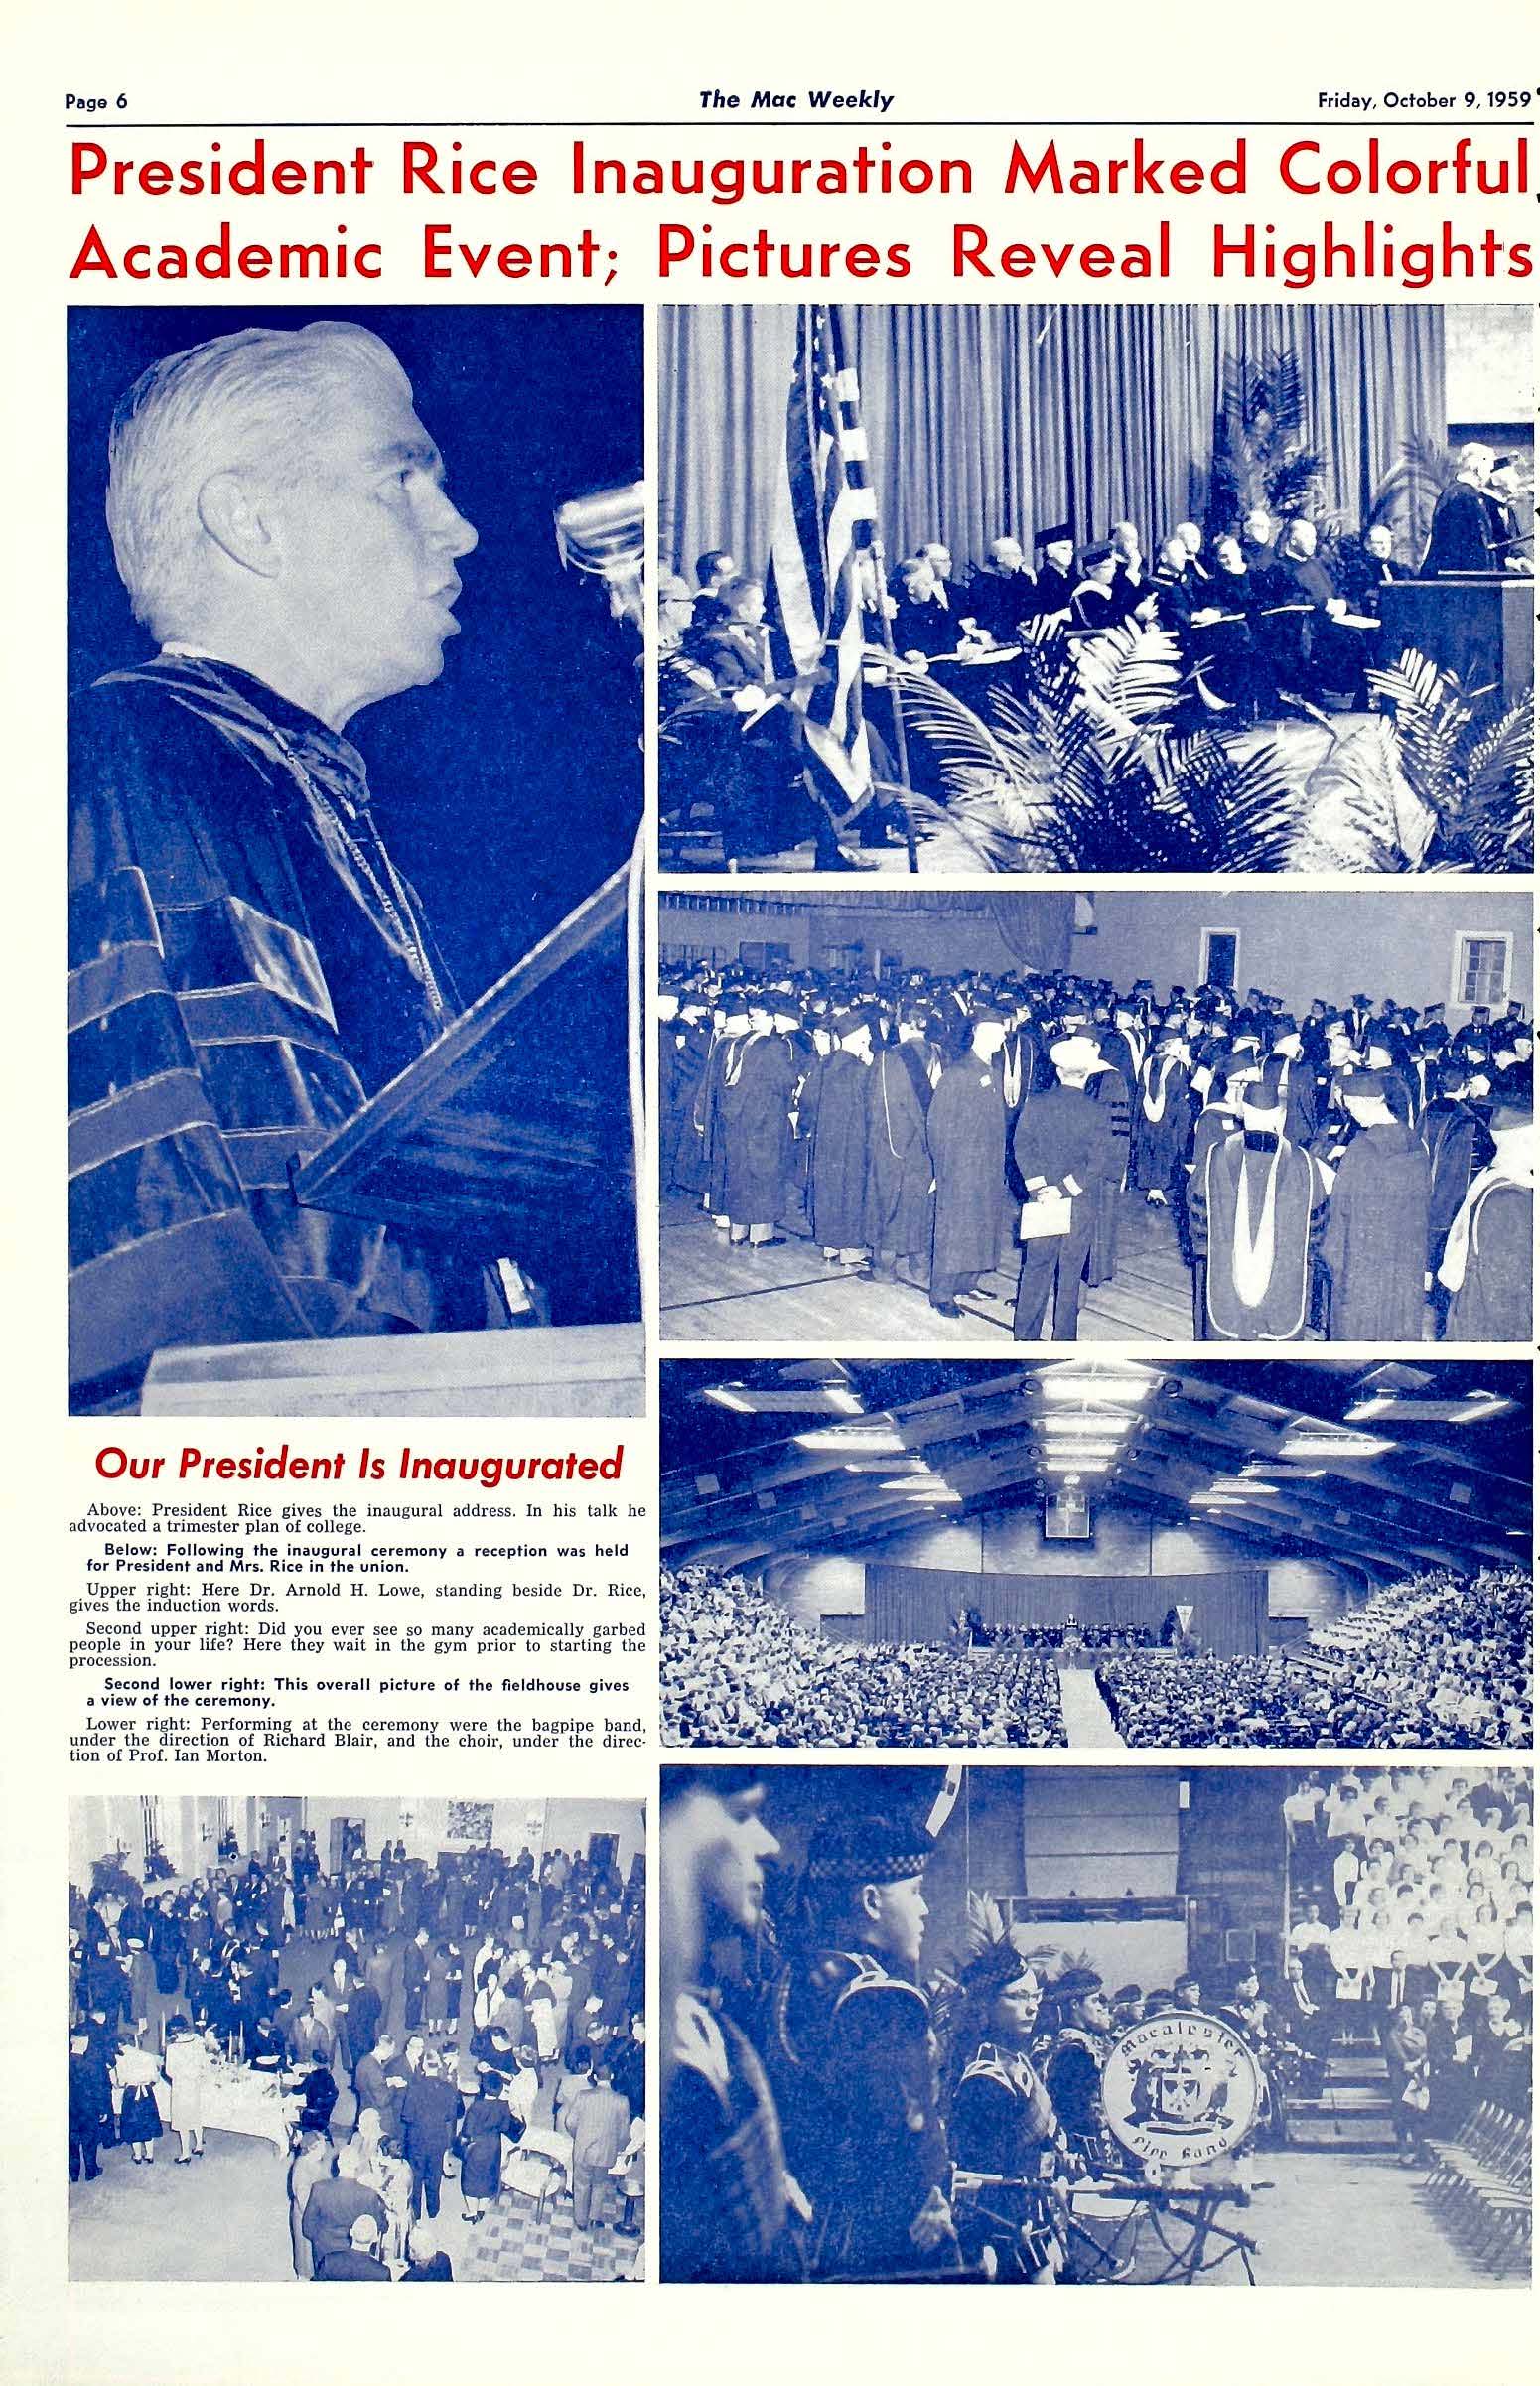 1959_inauguration